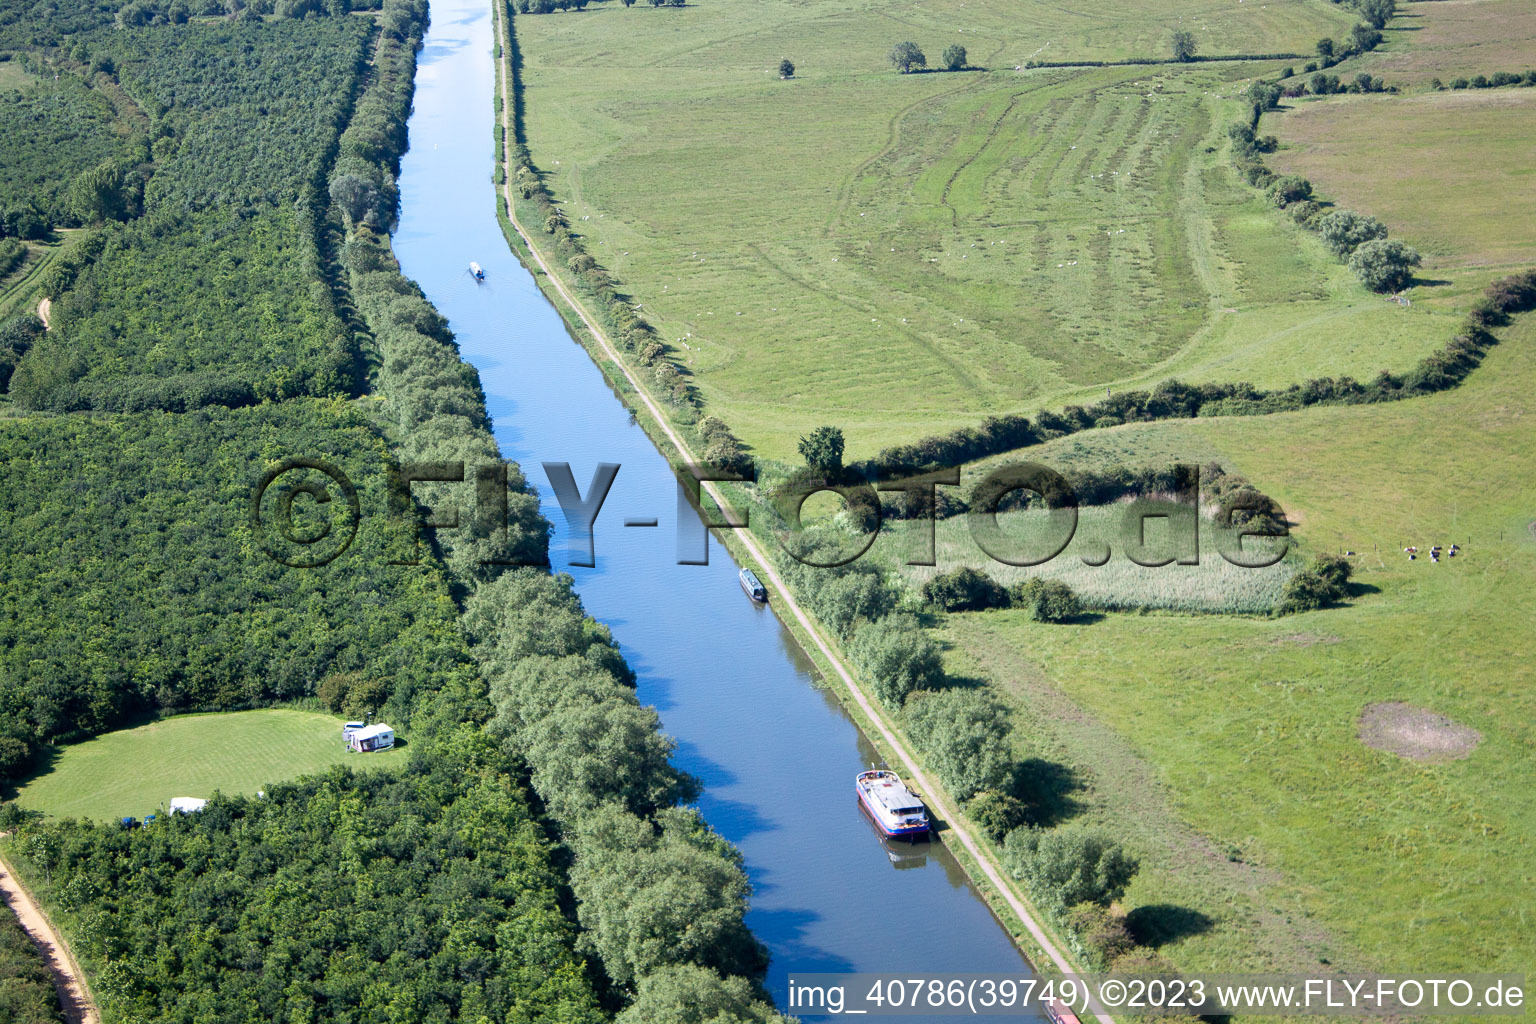 Luftbild von Gloucester-Sharpness Canal at Frampton-on-Severn in Frampton on Severn im Bundesland England, Großbritanien